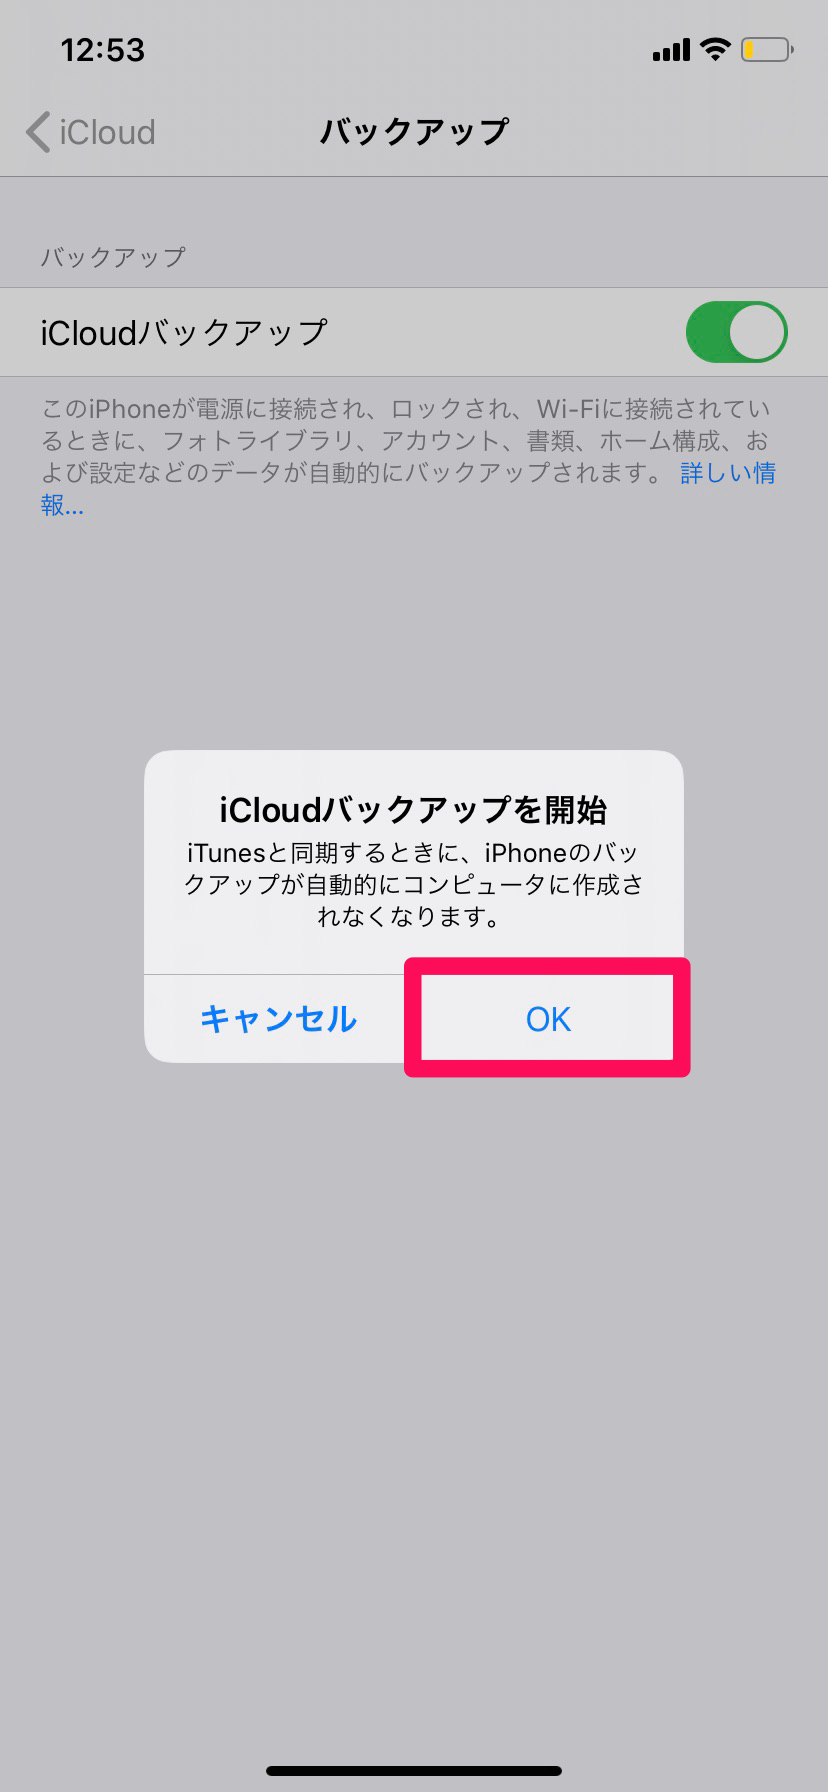 iCloud OK選択画面